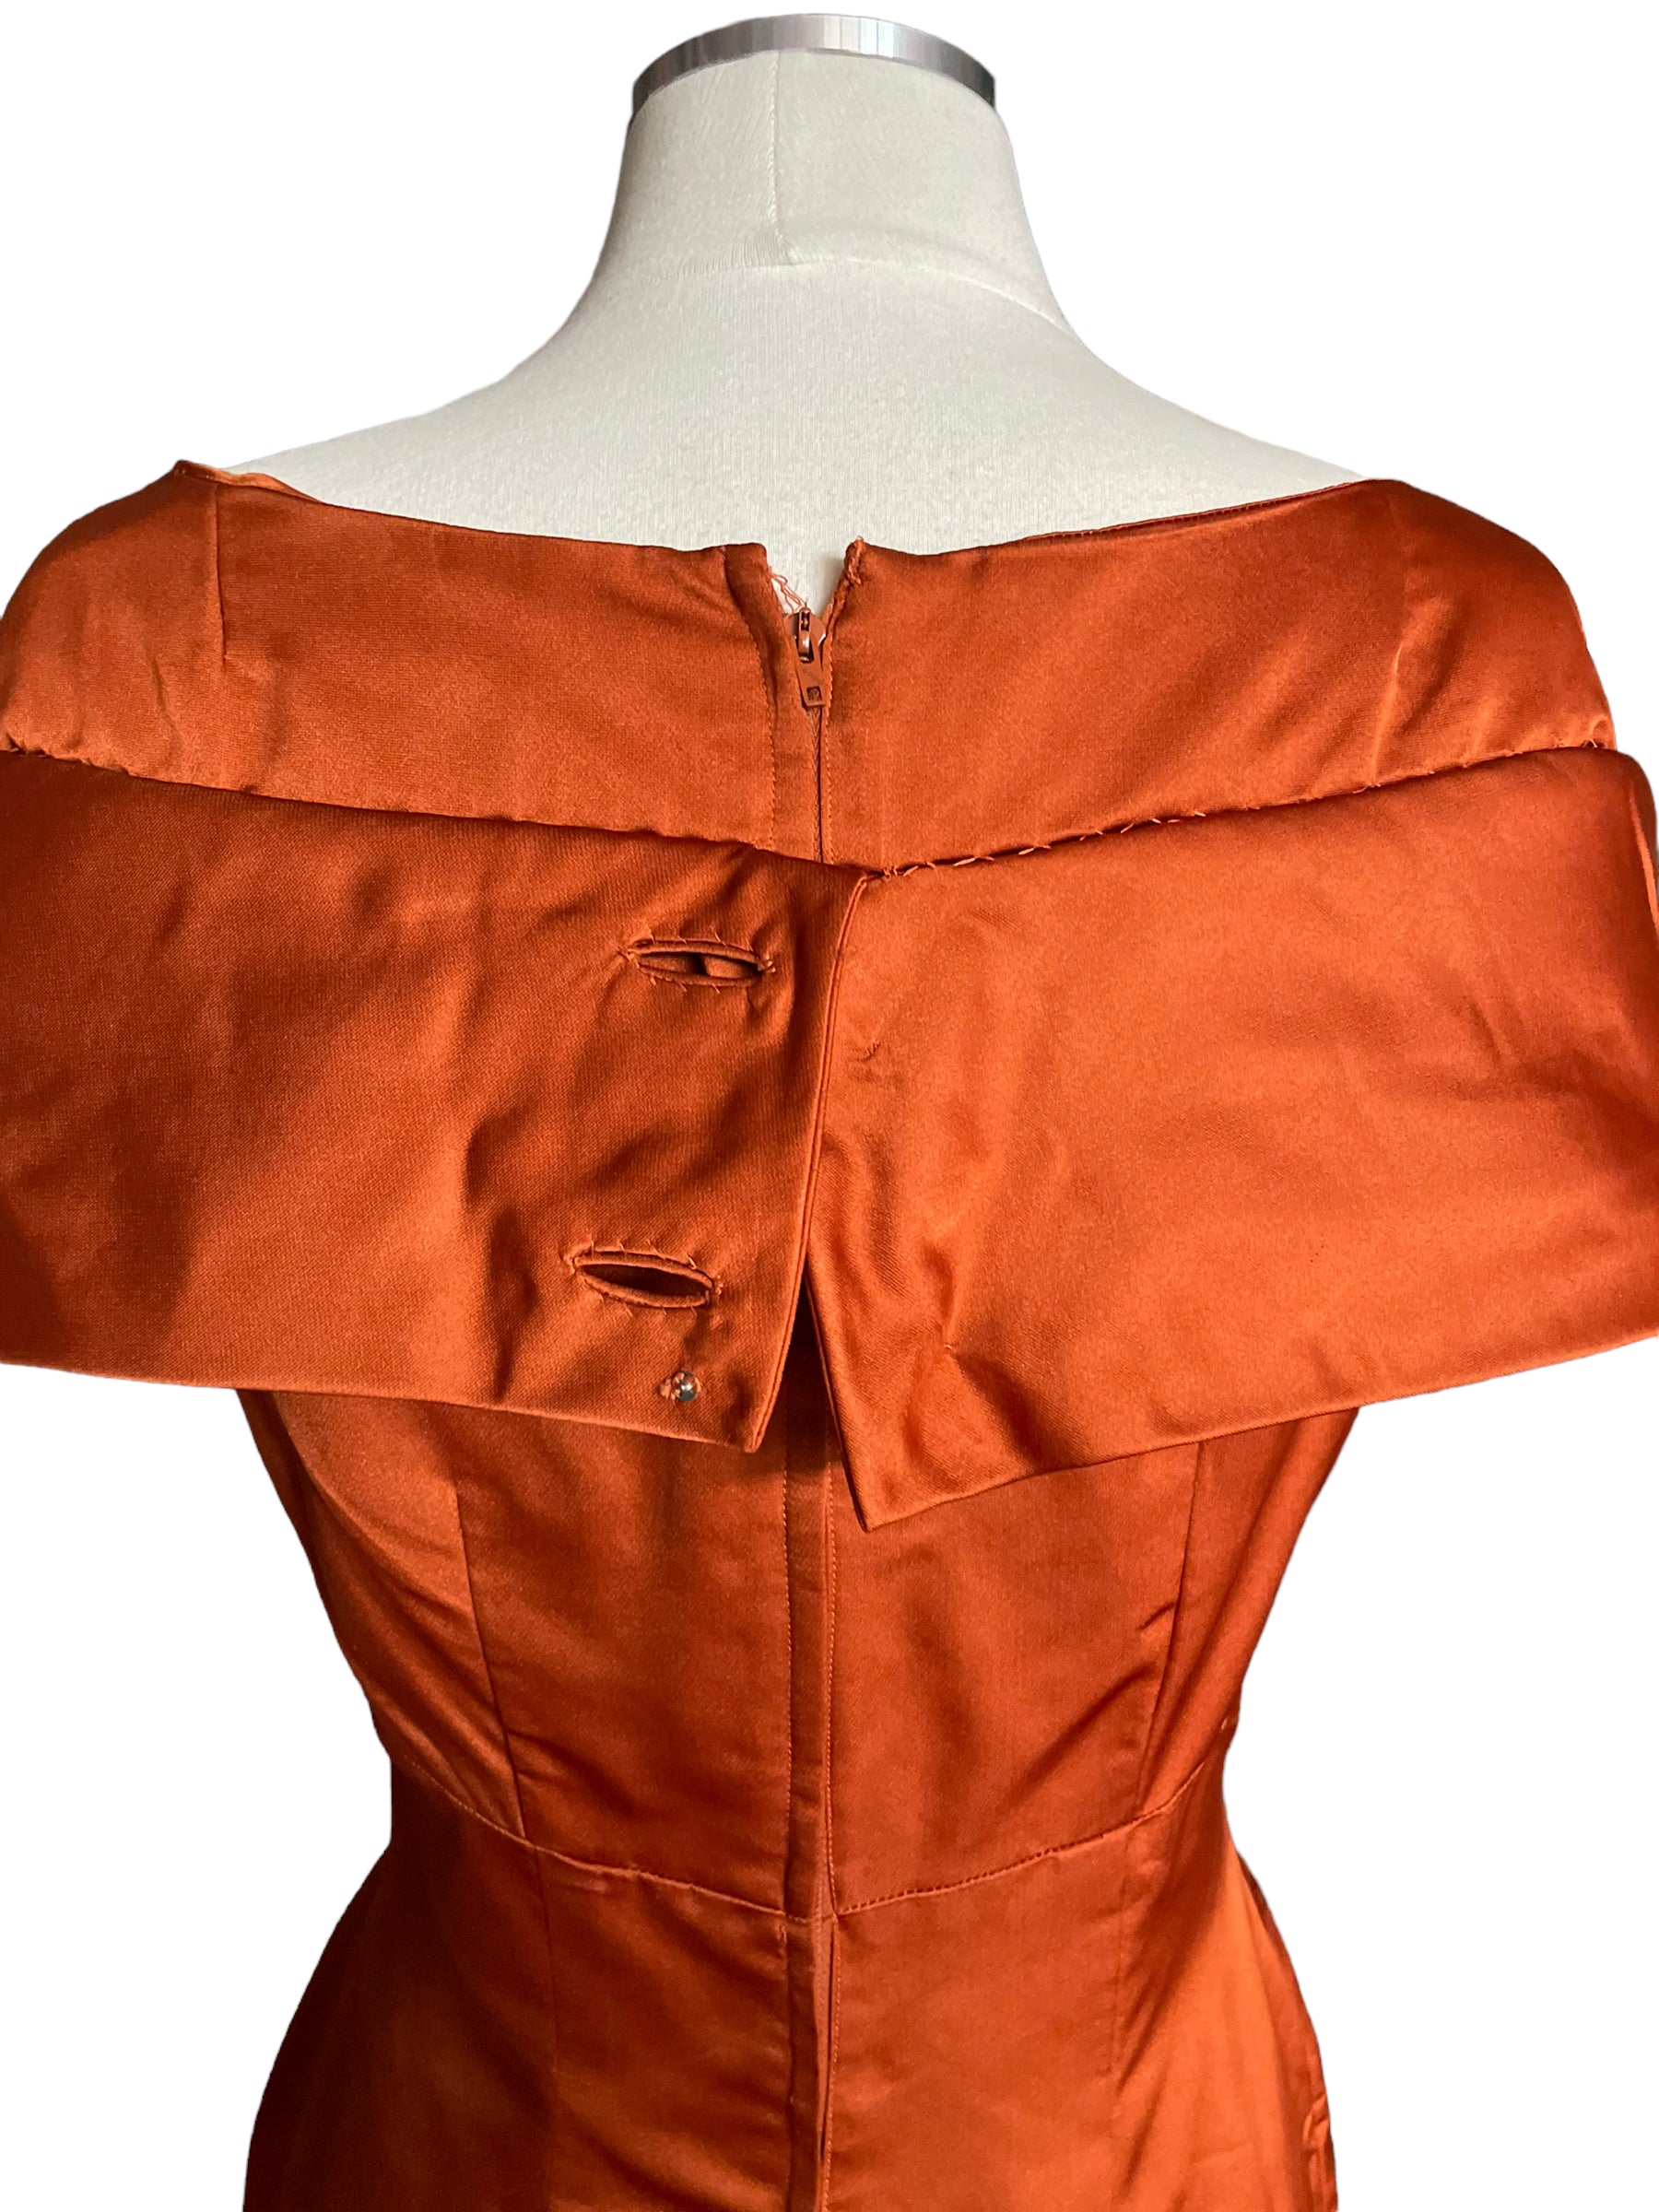 Back side collar view with collar unbottoned Vintage 1950s Burnt Orange Silk Dress SZ M